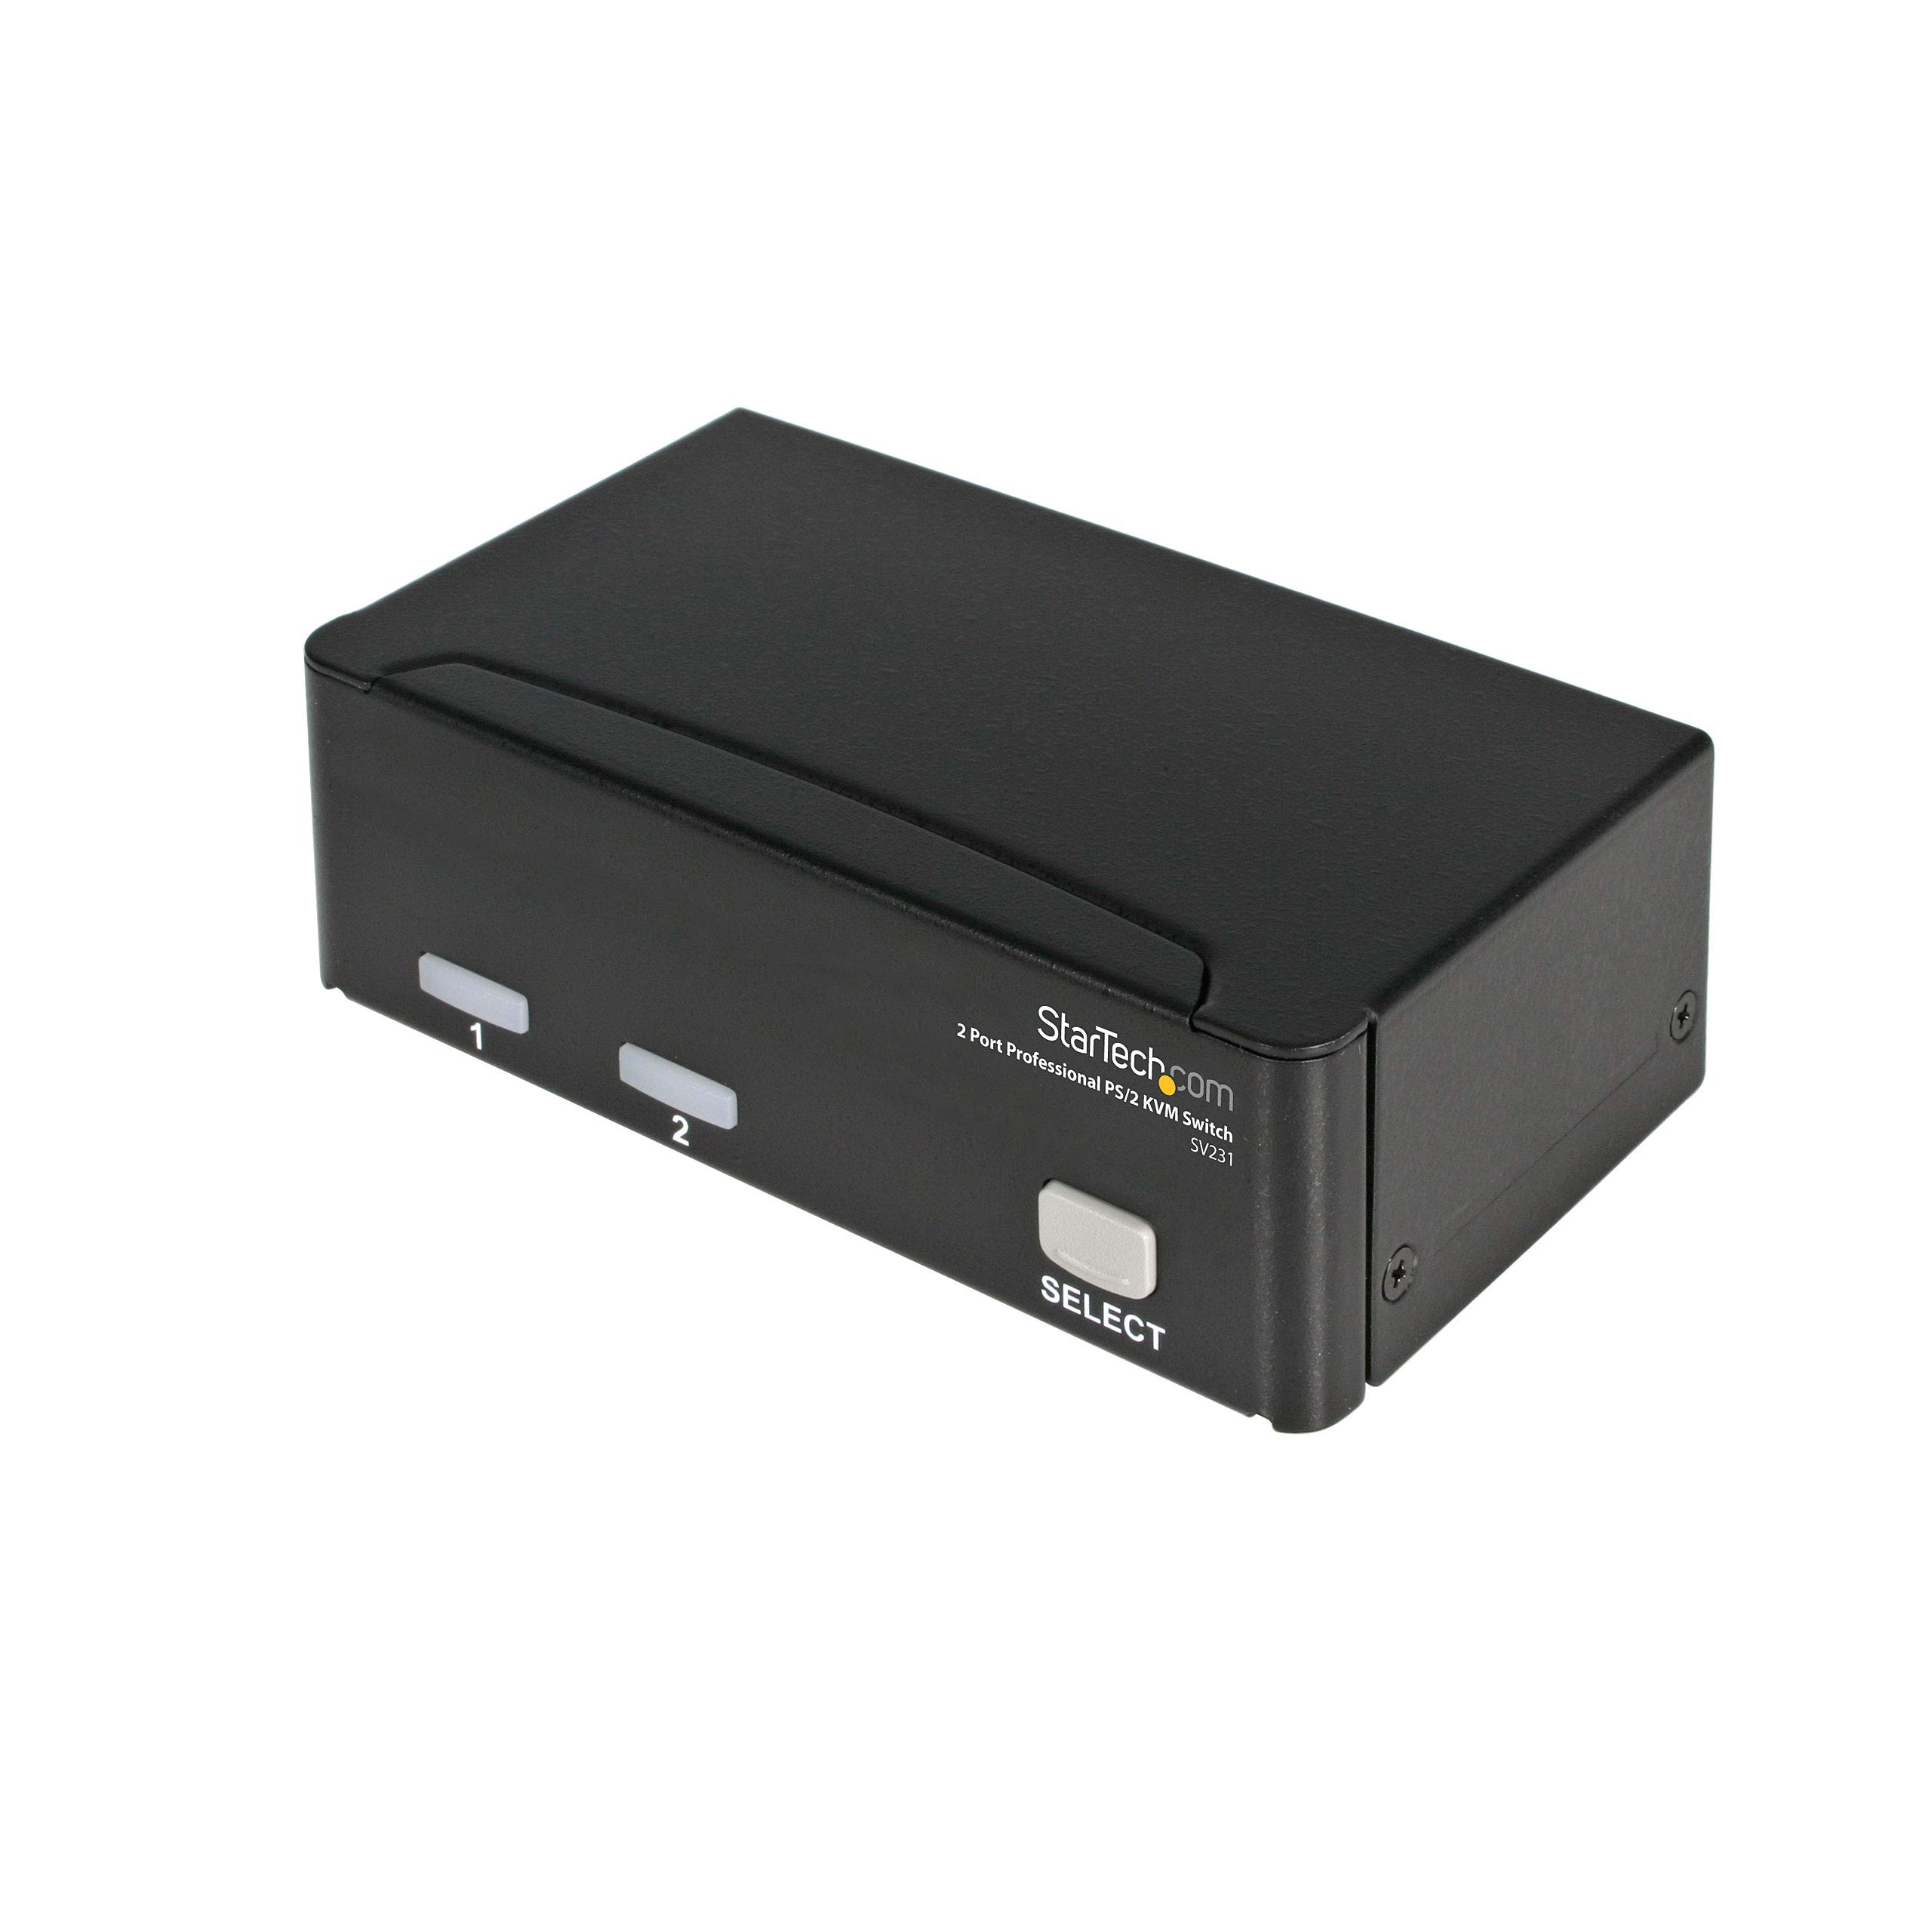 StarTech.com 2-Port Professional KVM Switch - 1U Rackmount KVM Switch - 2-Port - 1920 x 1440 (SV231)